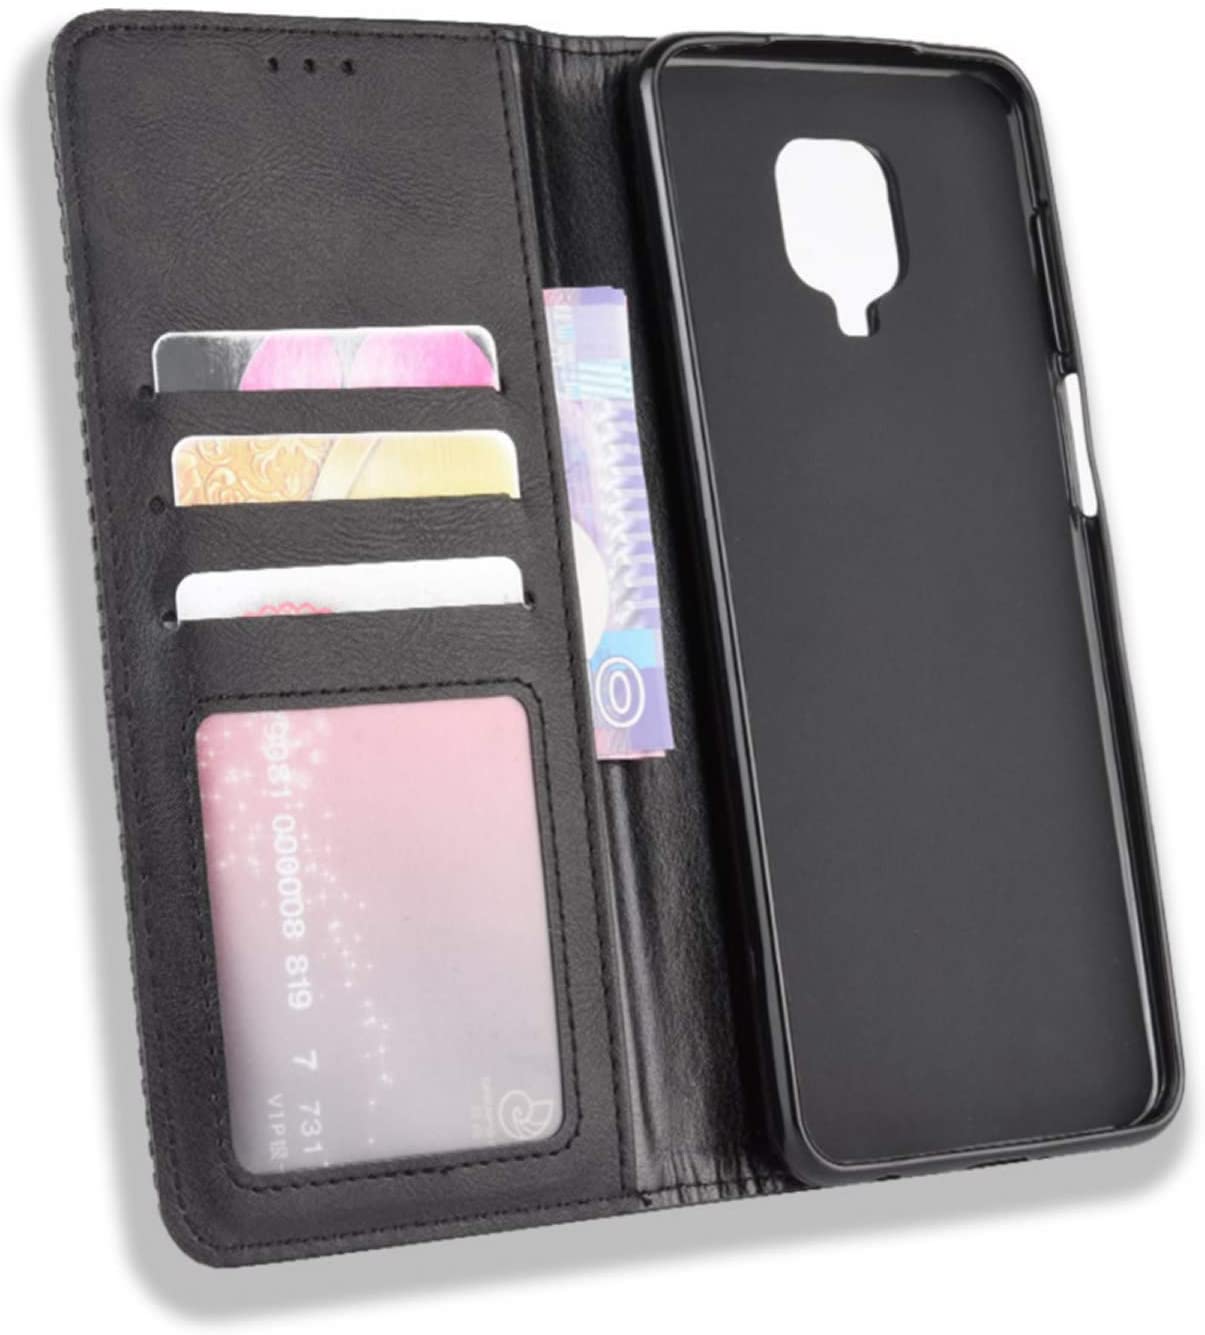 Excelsior Premium Leather Wallet Flip Cover Case For Xiaomi Mi Redmi Note 9 Pro Max